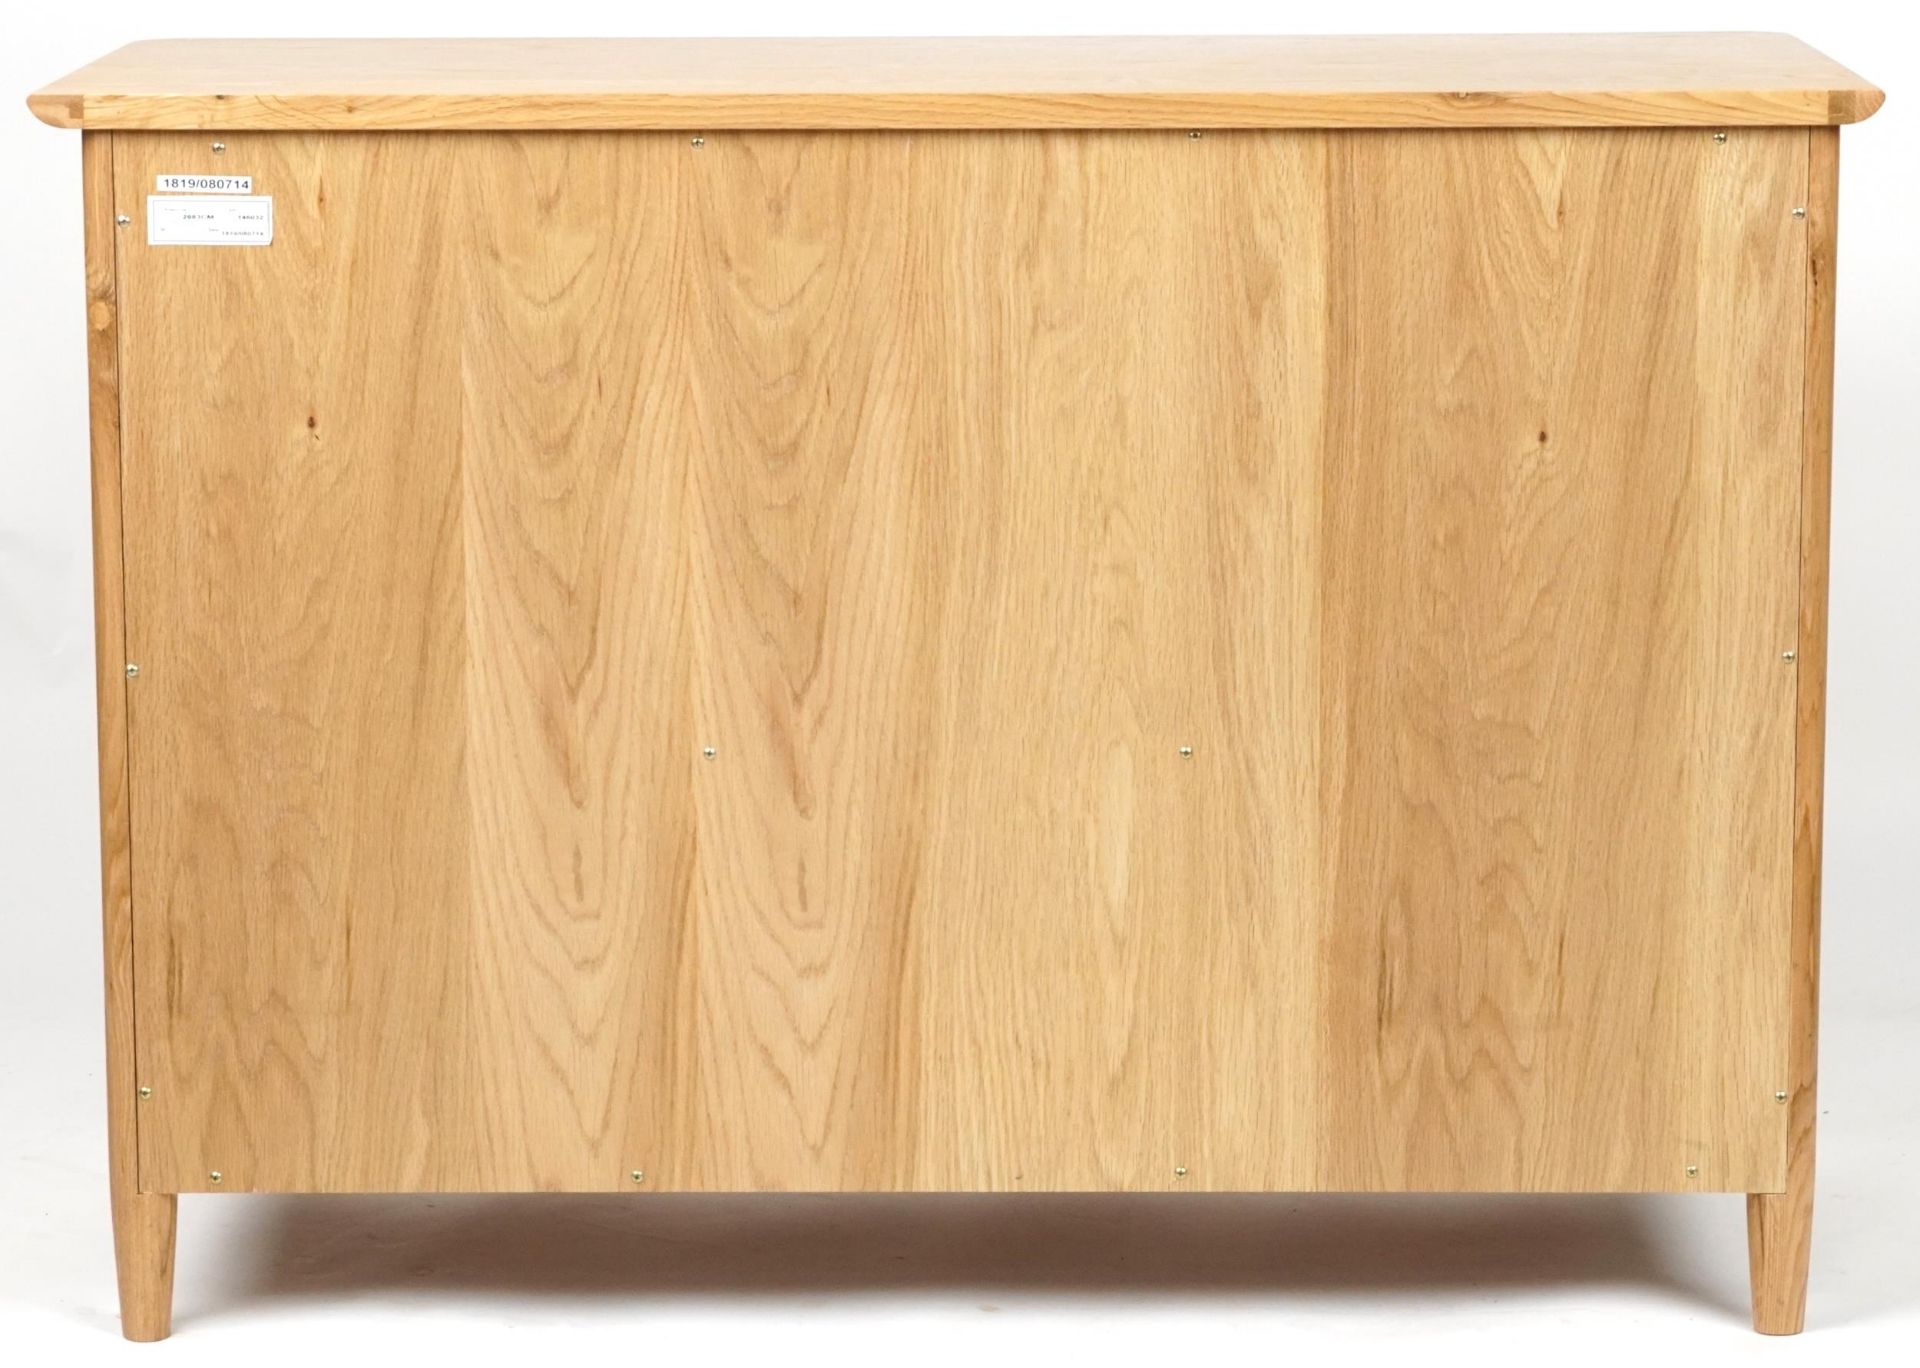 Ercol Teramo contemporary light oak five drawer chest, 79cm H x 114cm W x 47cm D - Bild 4 aus 6